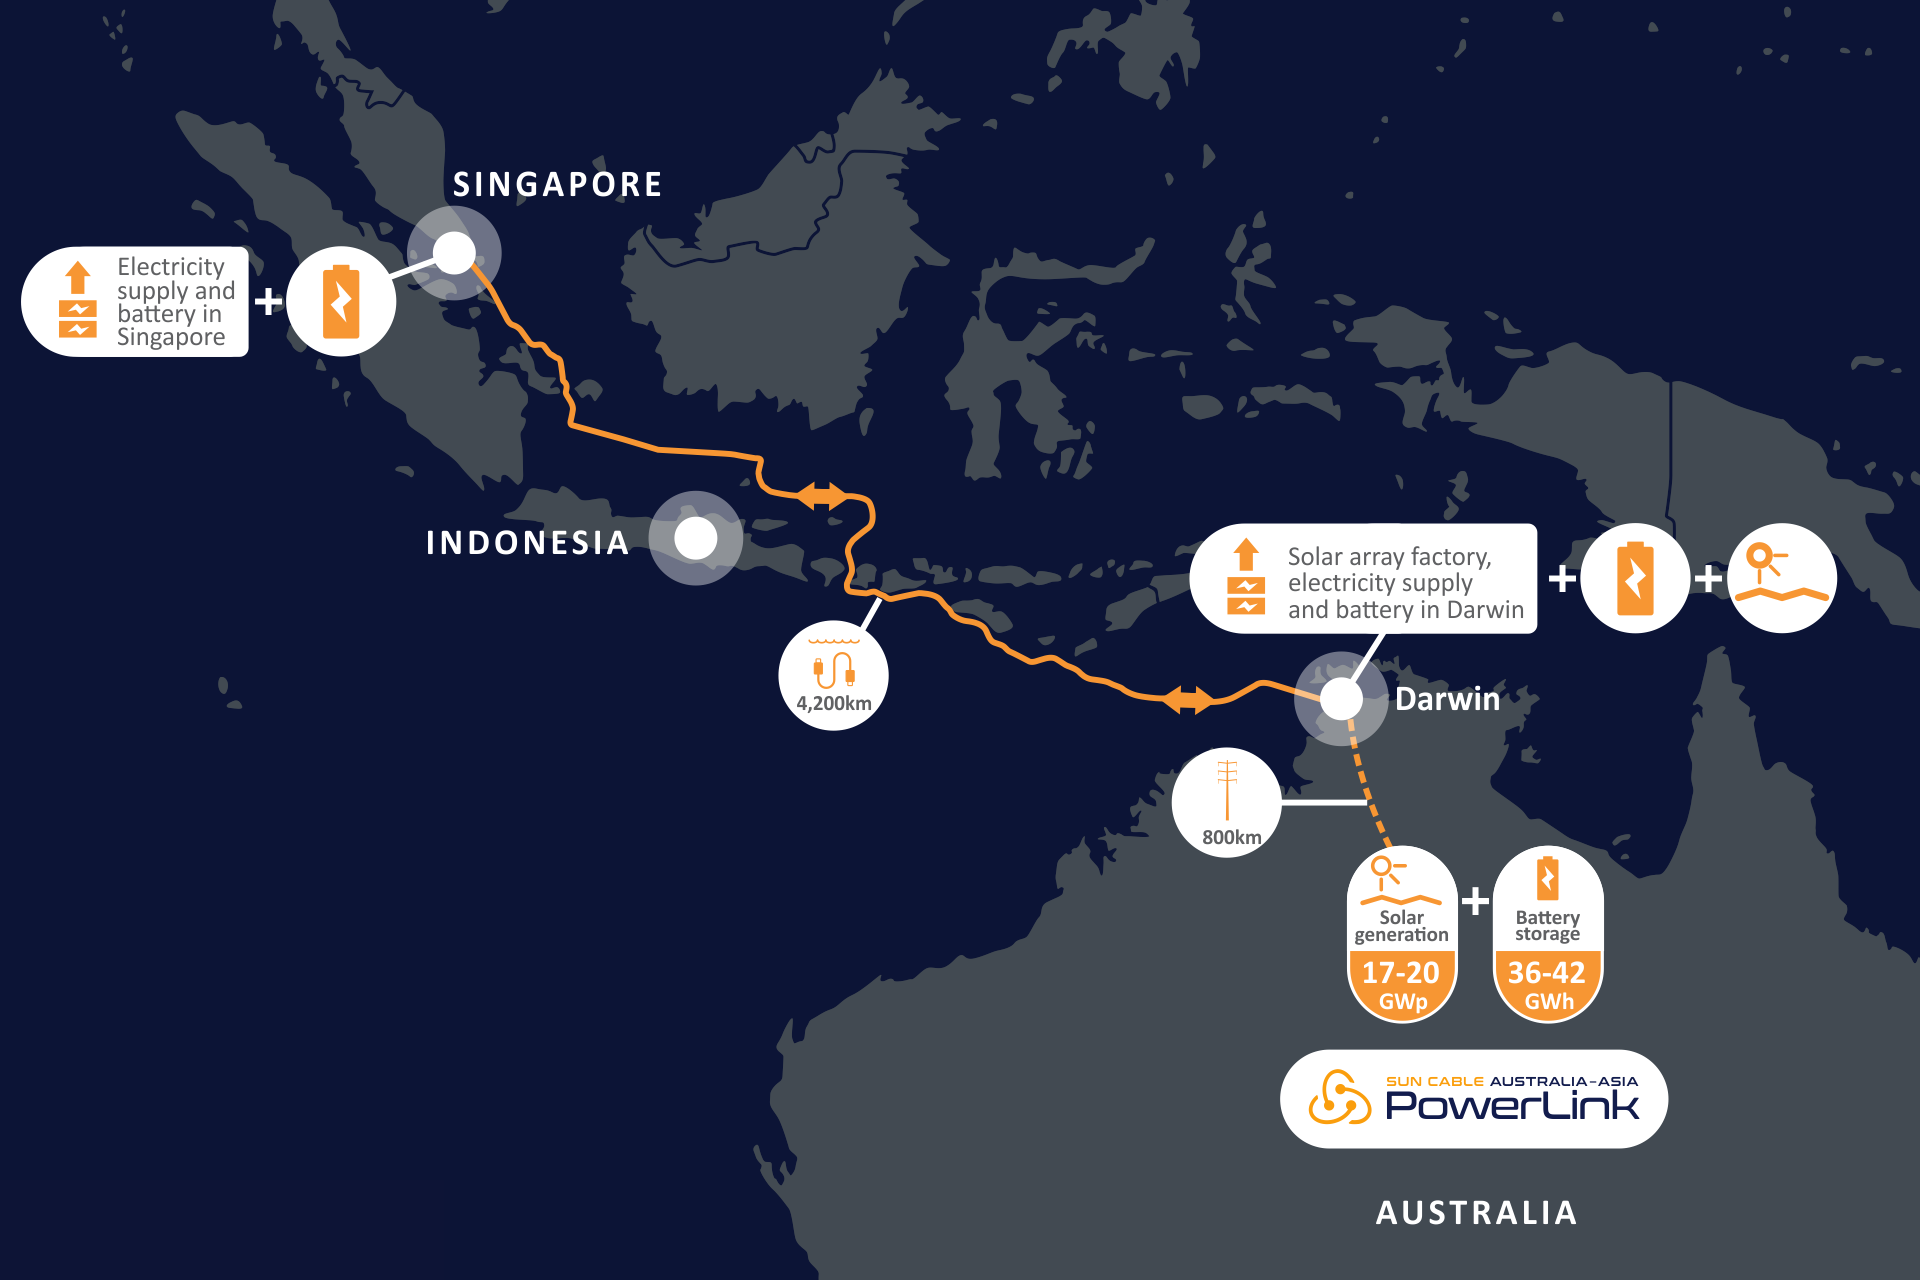 Sun Cable enters administration, Australia-Asia Powerlink project solar farm